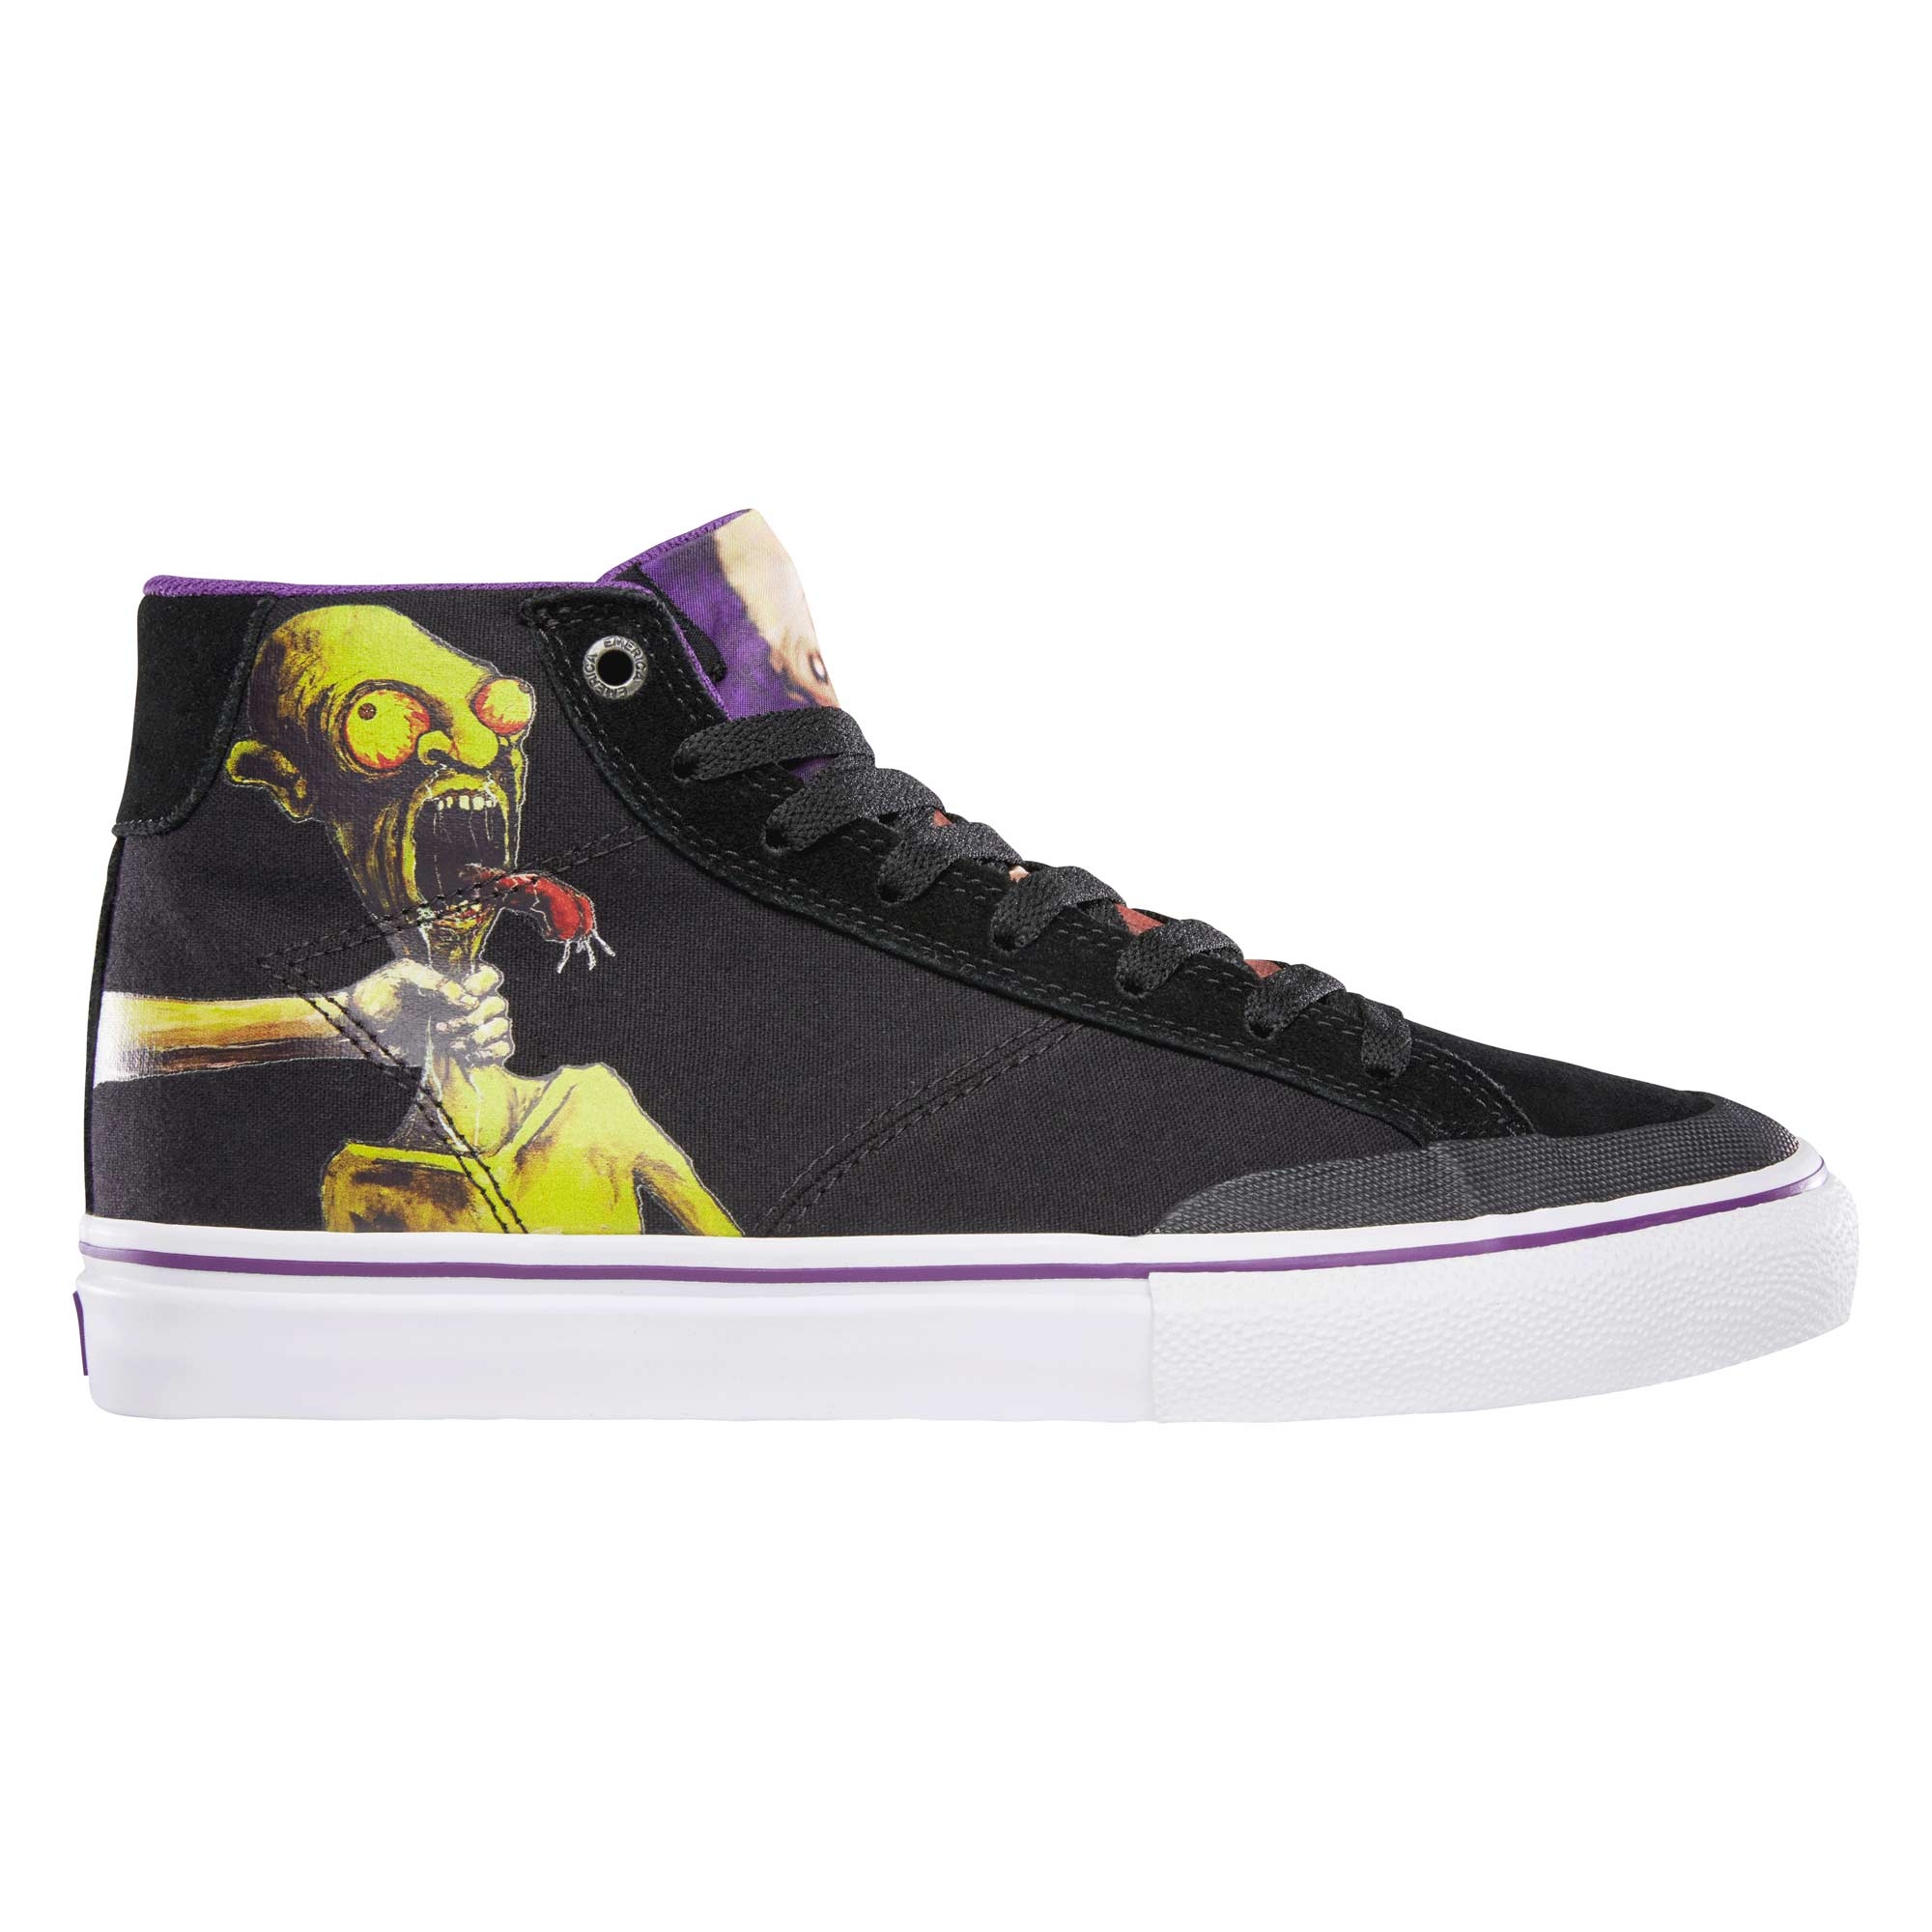 EMERICA Shoe OMEN HI X DINOSAUR JR. bla/pur black/purple